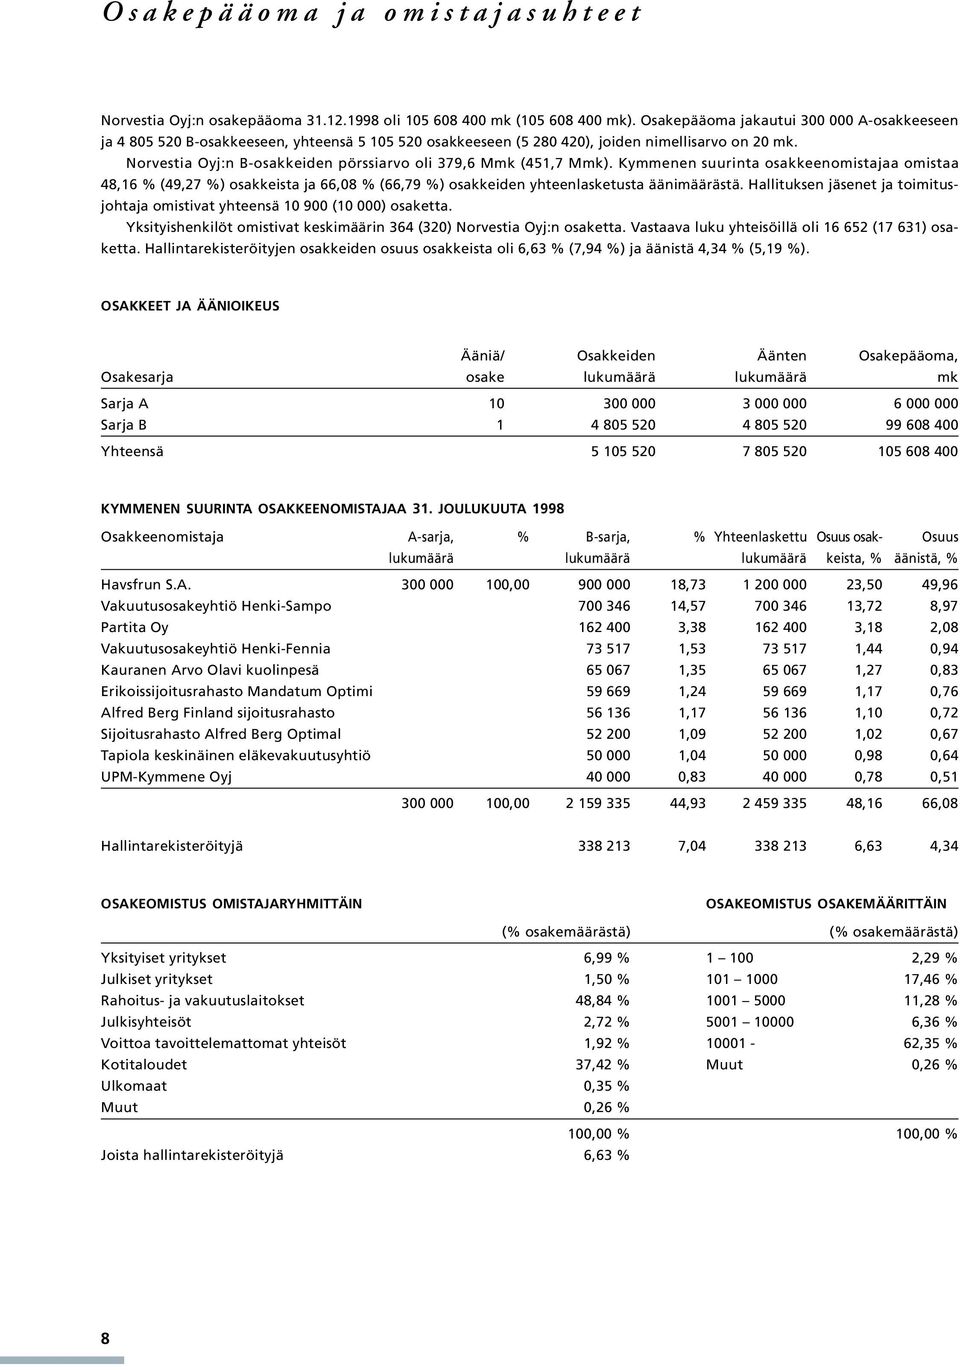 Norvestia Oyj:n B-osakkeiden pörssiarvo oli 379,6 Mmk (451,7 Mmk).